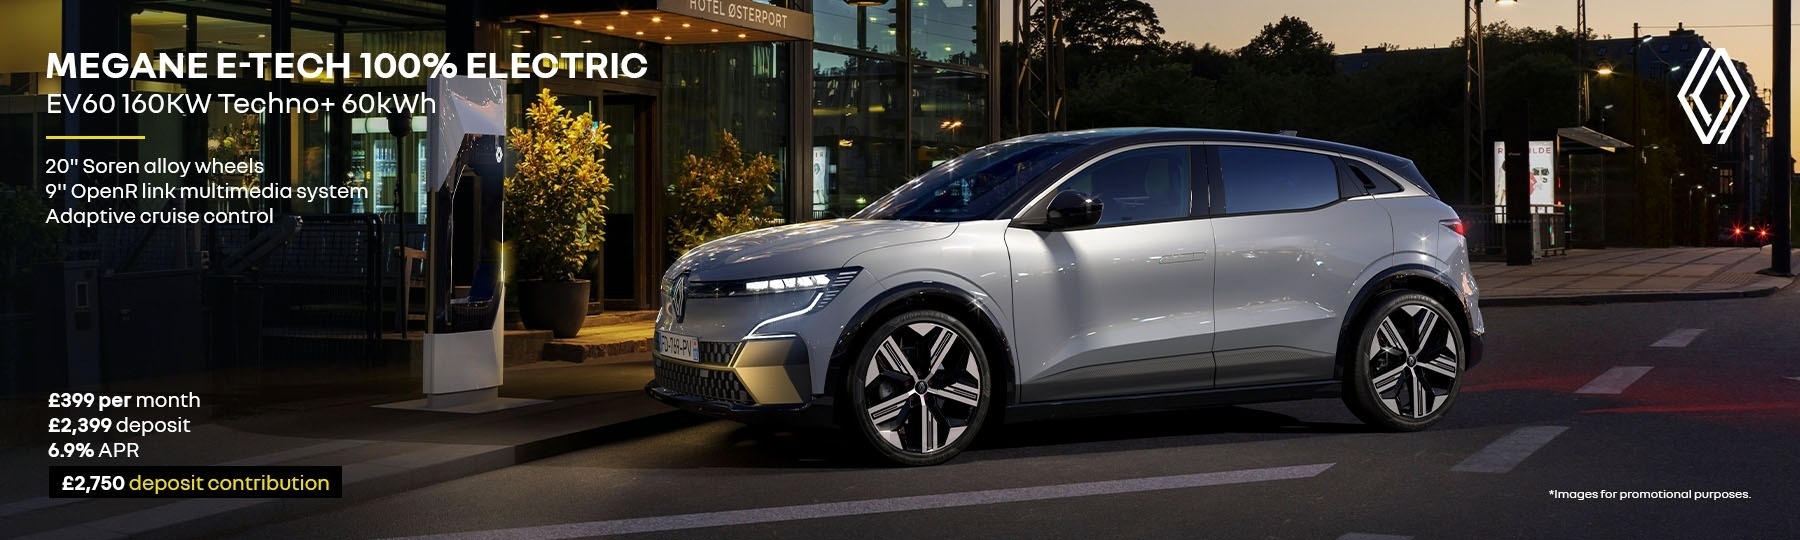 Renault Megane E-Tech 100% electric New Car Offer